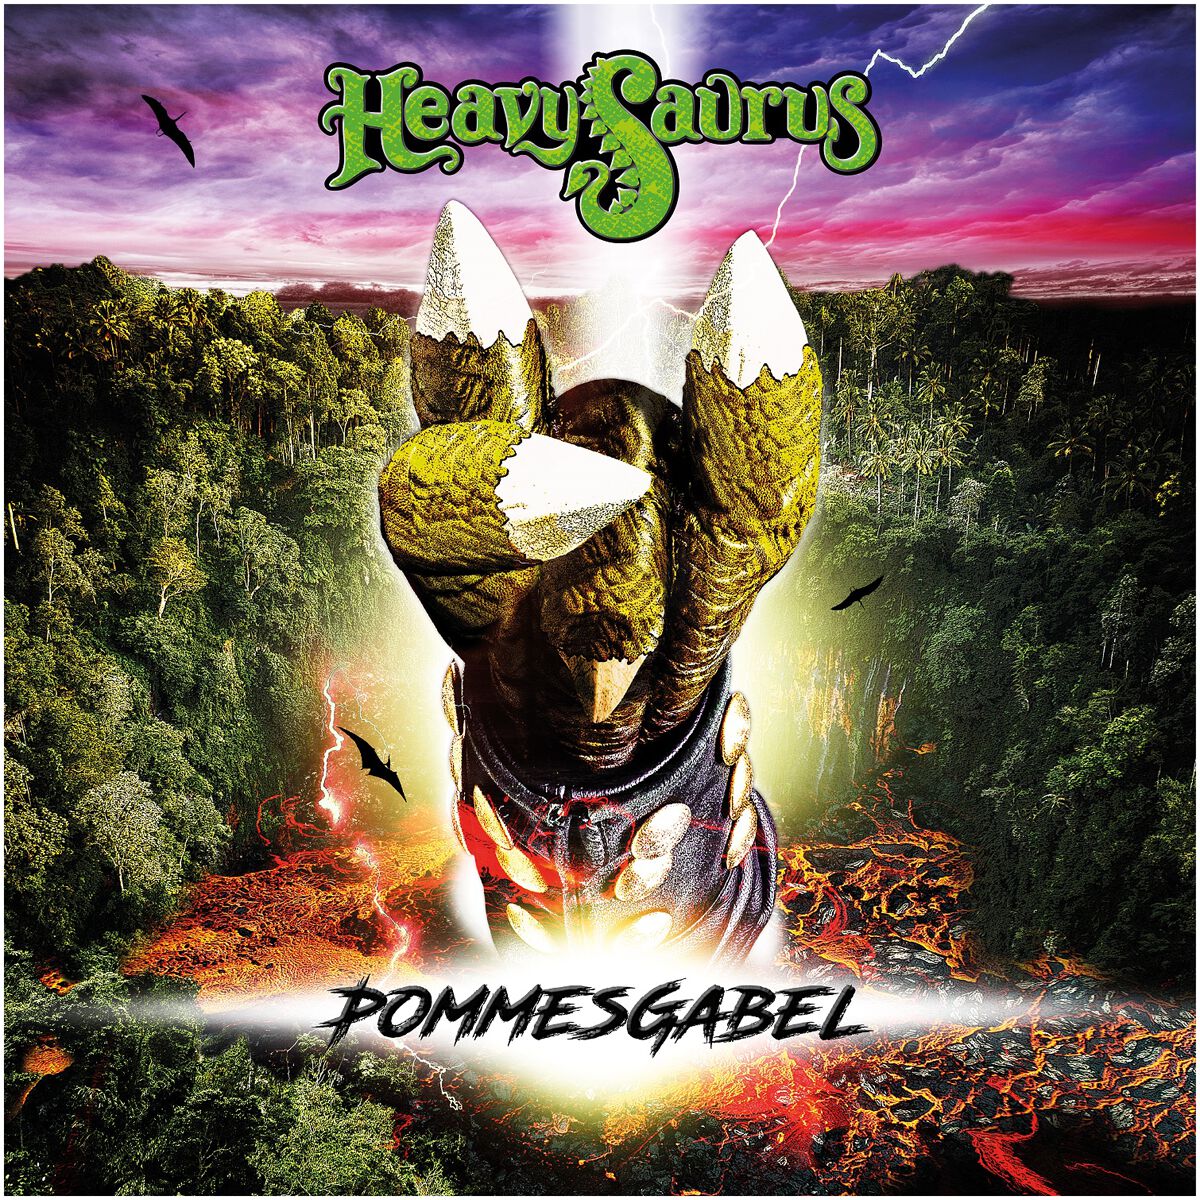 Heavysaurus Pommesgabel CD multicolor